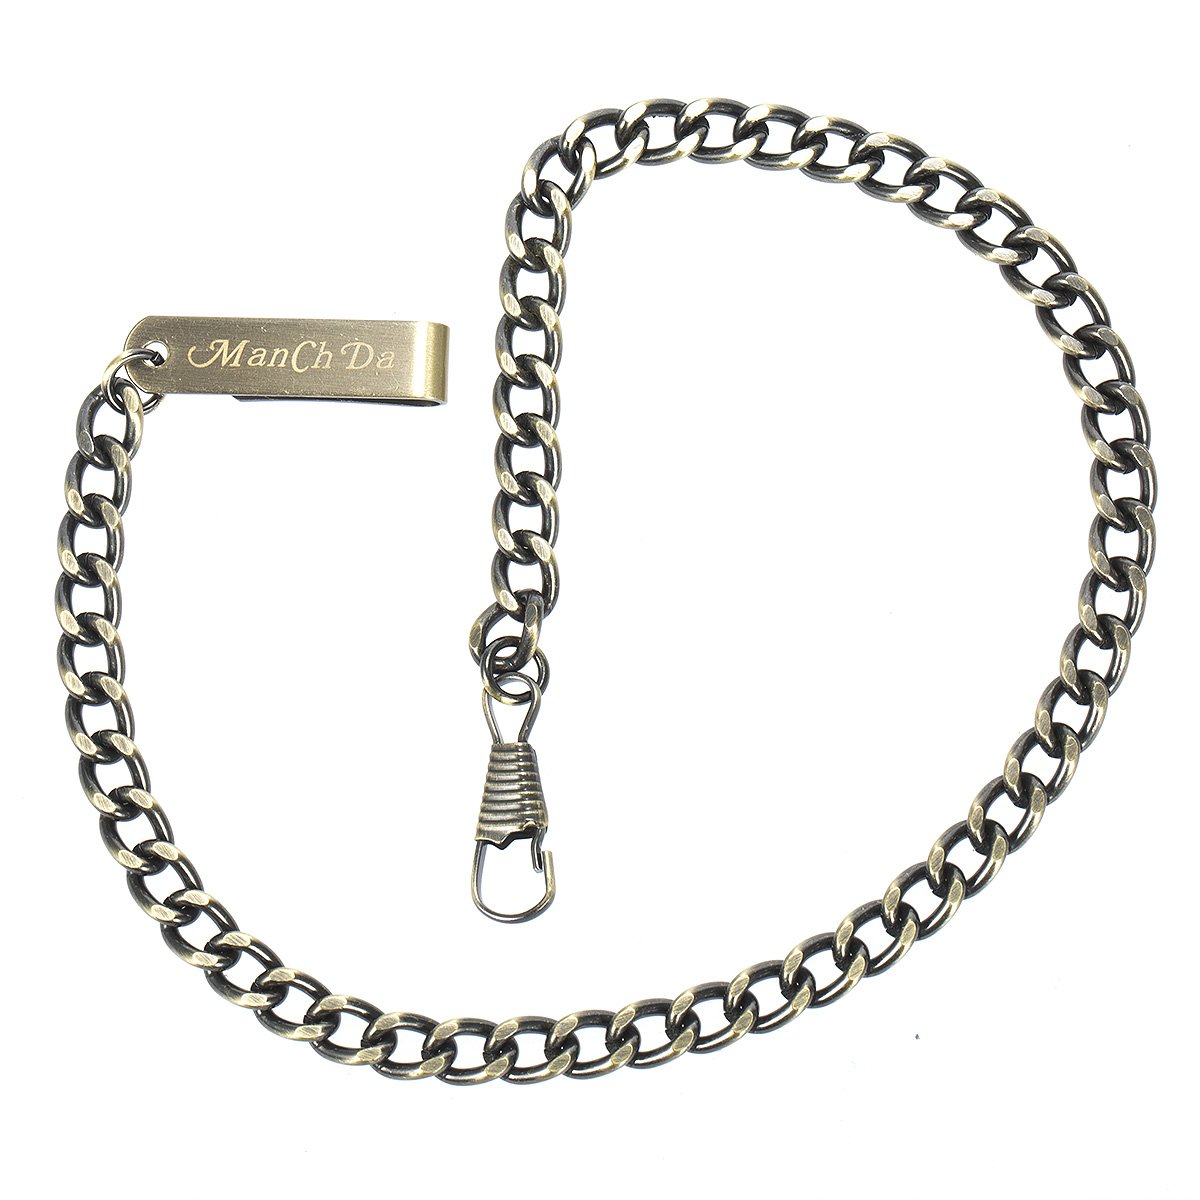 ManChDa Antique Stainless Steel Chain, for Pocket Watch Biker Punk Men Cool Trouser Wallet Chain